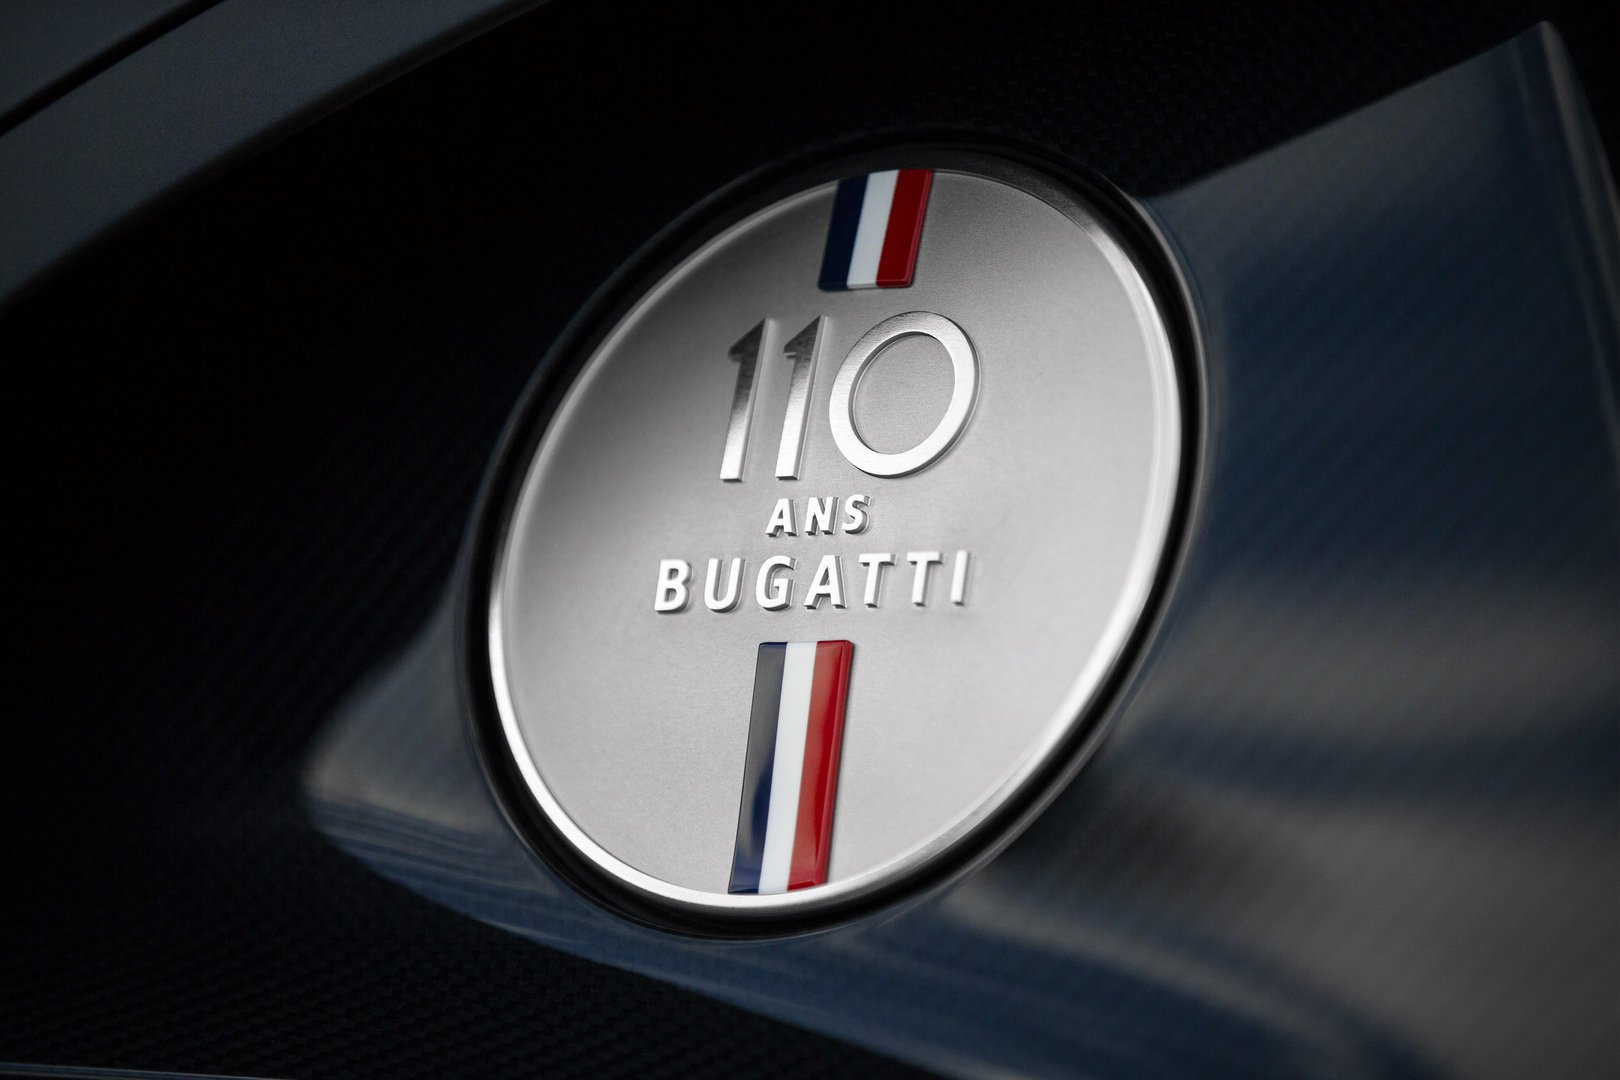 Bugatti 110 ans